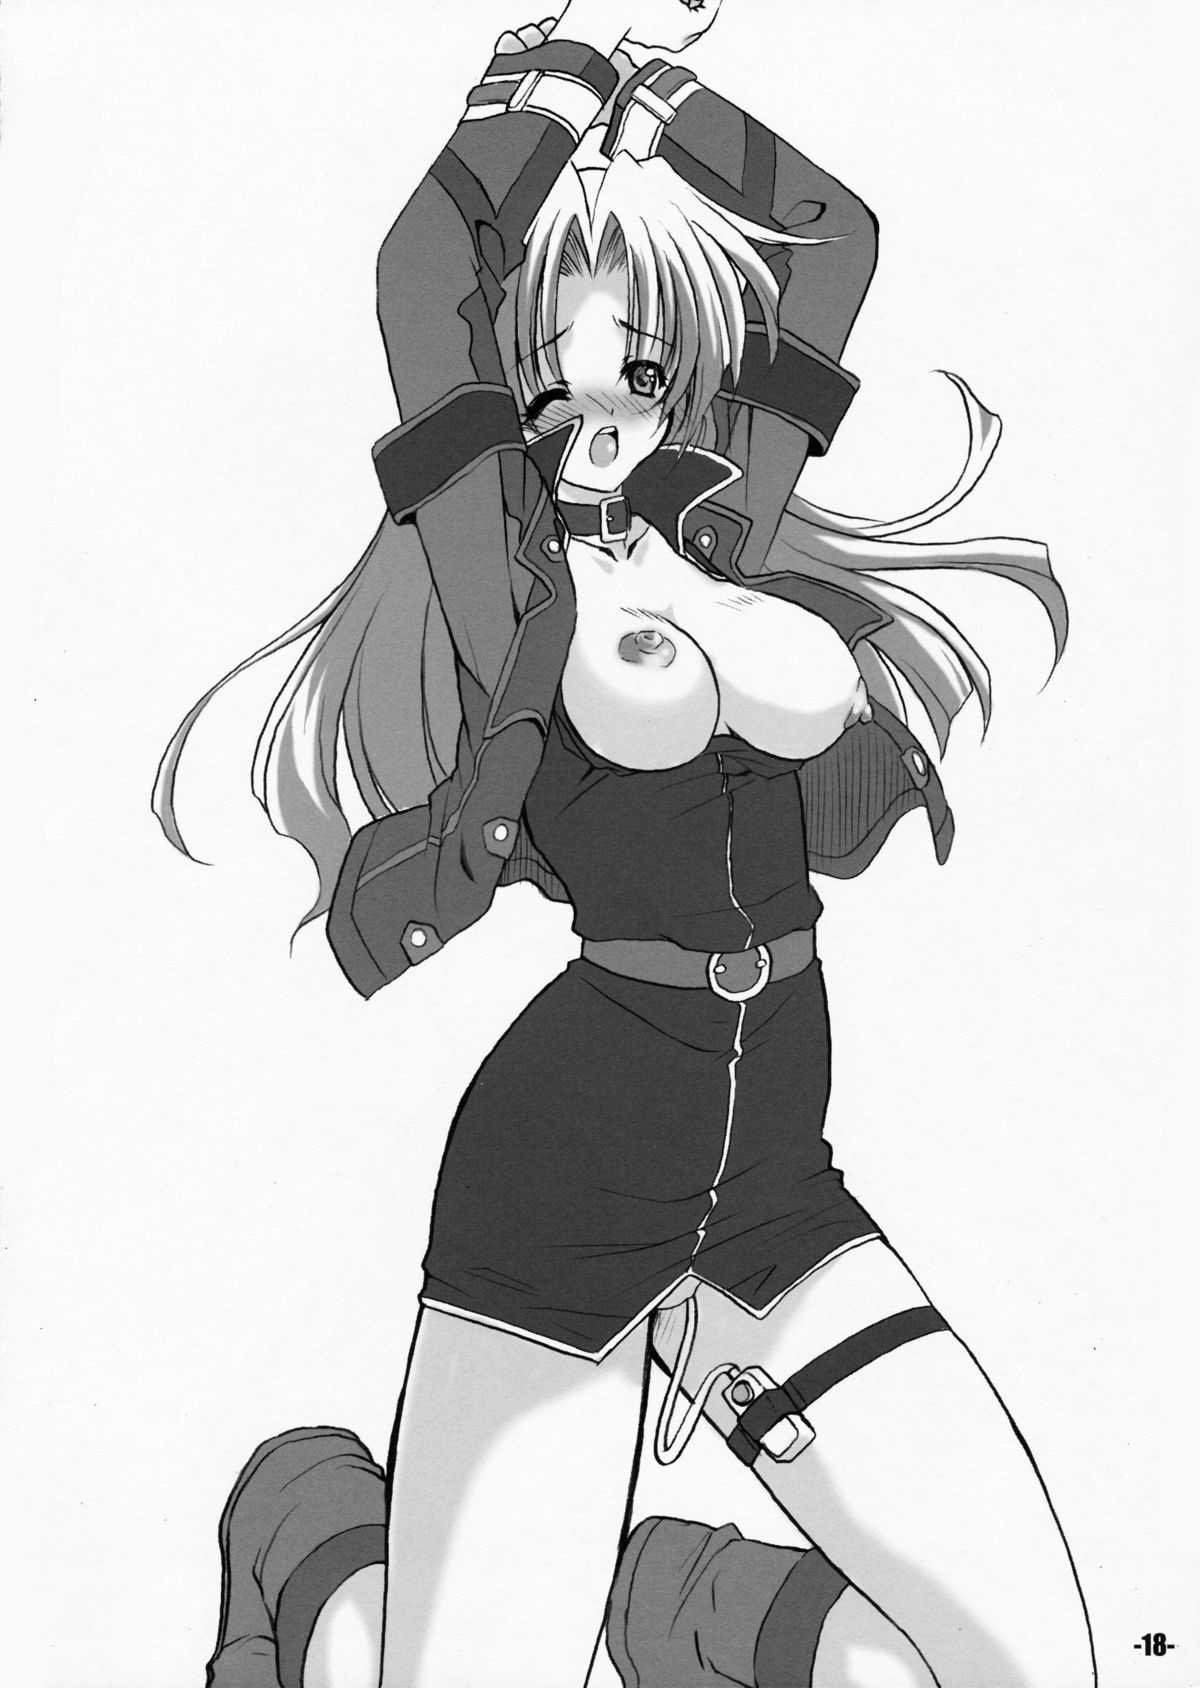 (	Comic Castle 2005) [EXtage (Minakami Hiroki)] EXtra stage vol.17 Z.O (Super Robot Taisen) (コミックキャッスル2005) [EXtage (水上広樹)] EXtra stage vol.17 Z.O (スーパーロボット大戦)